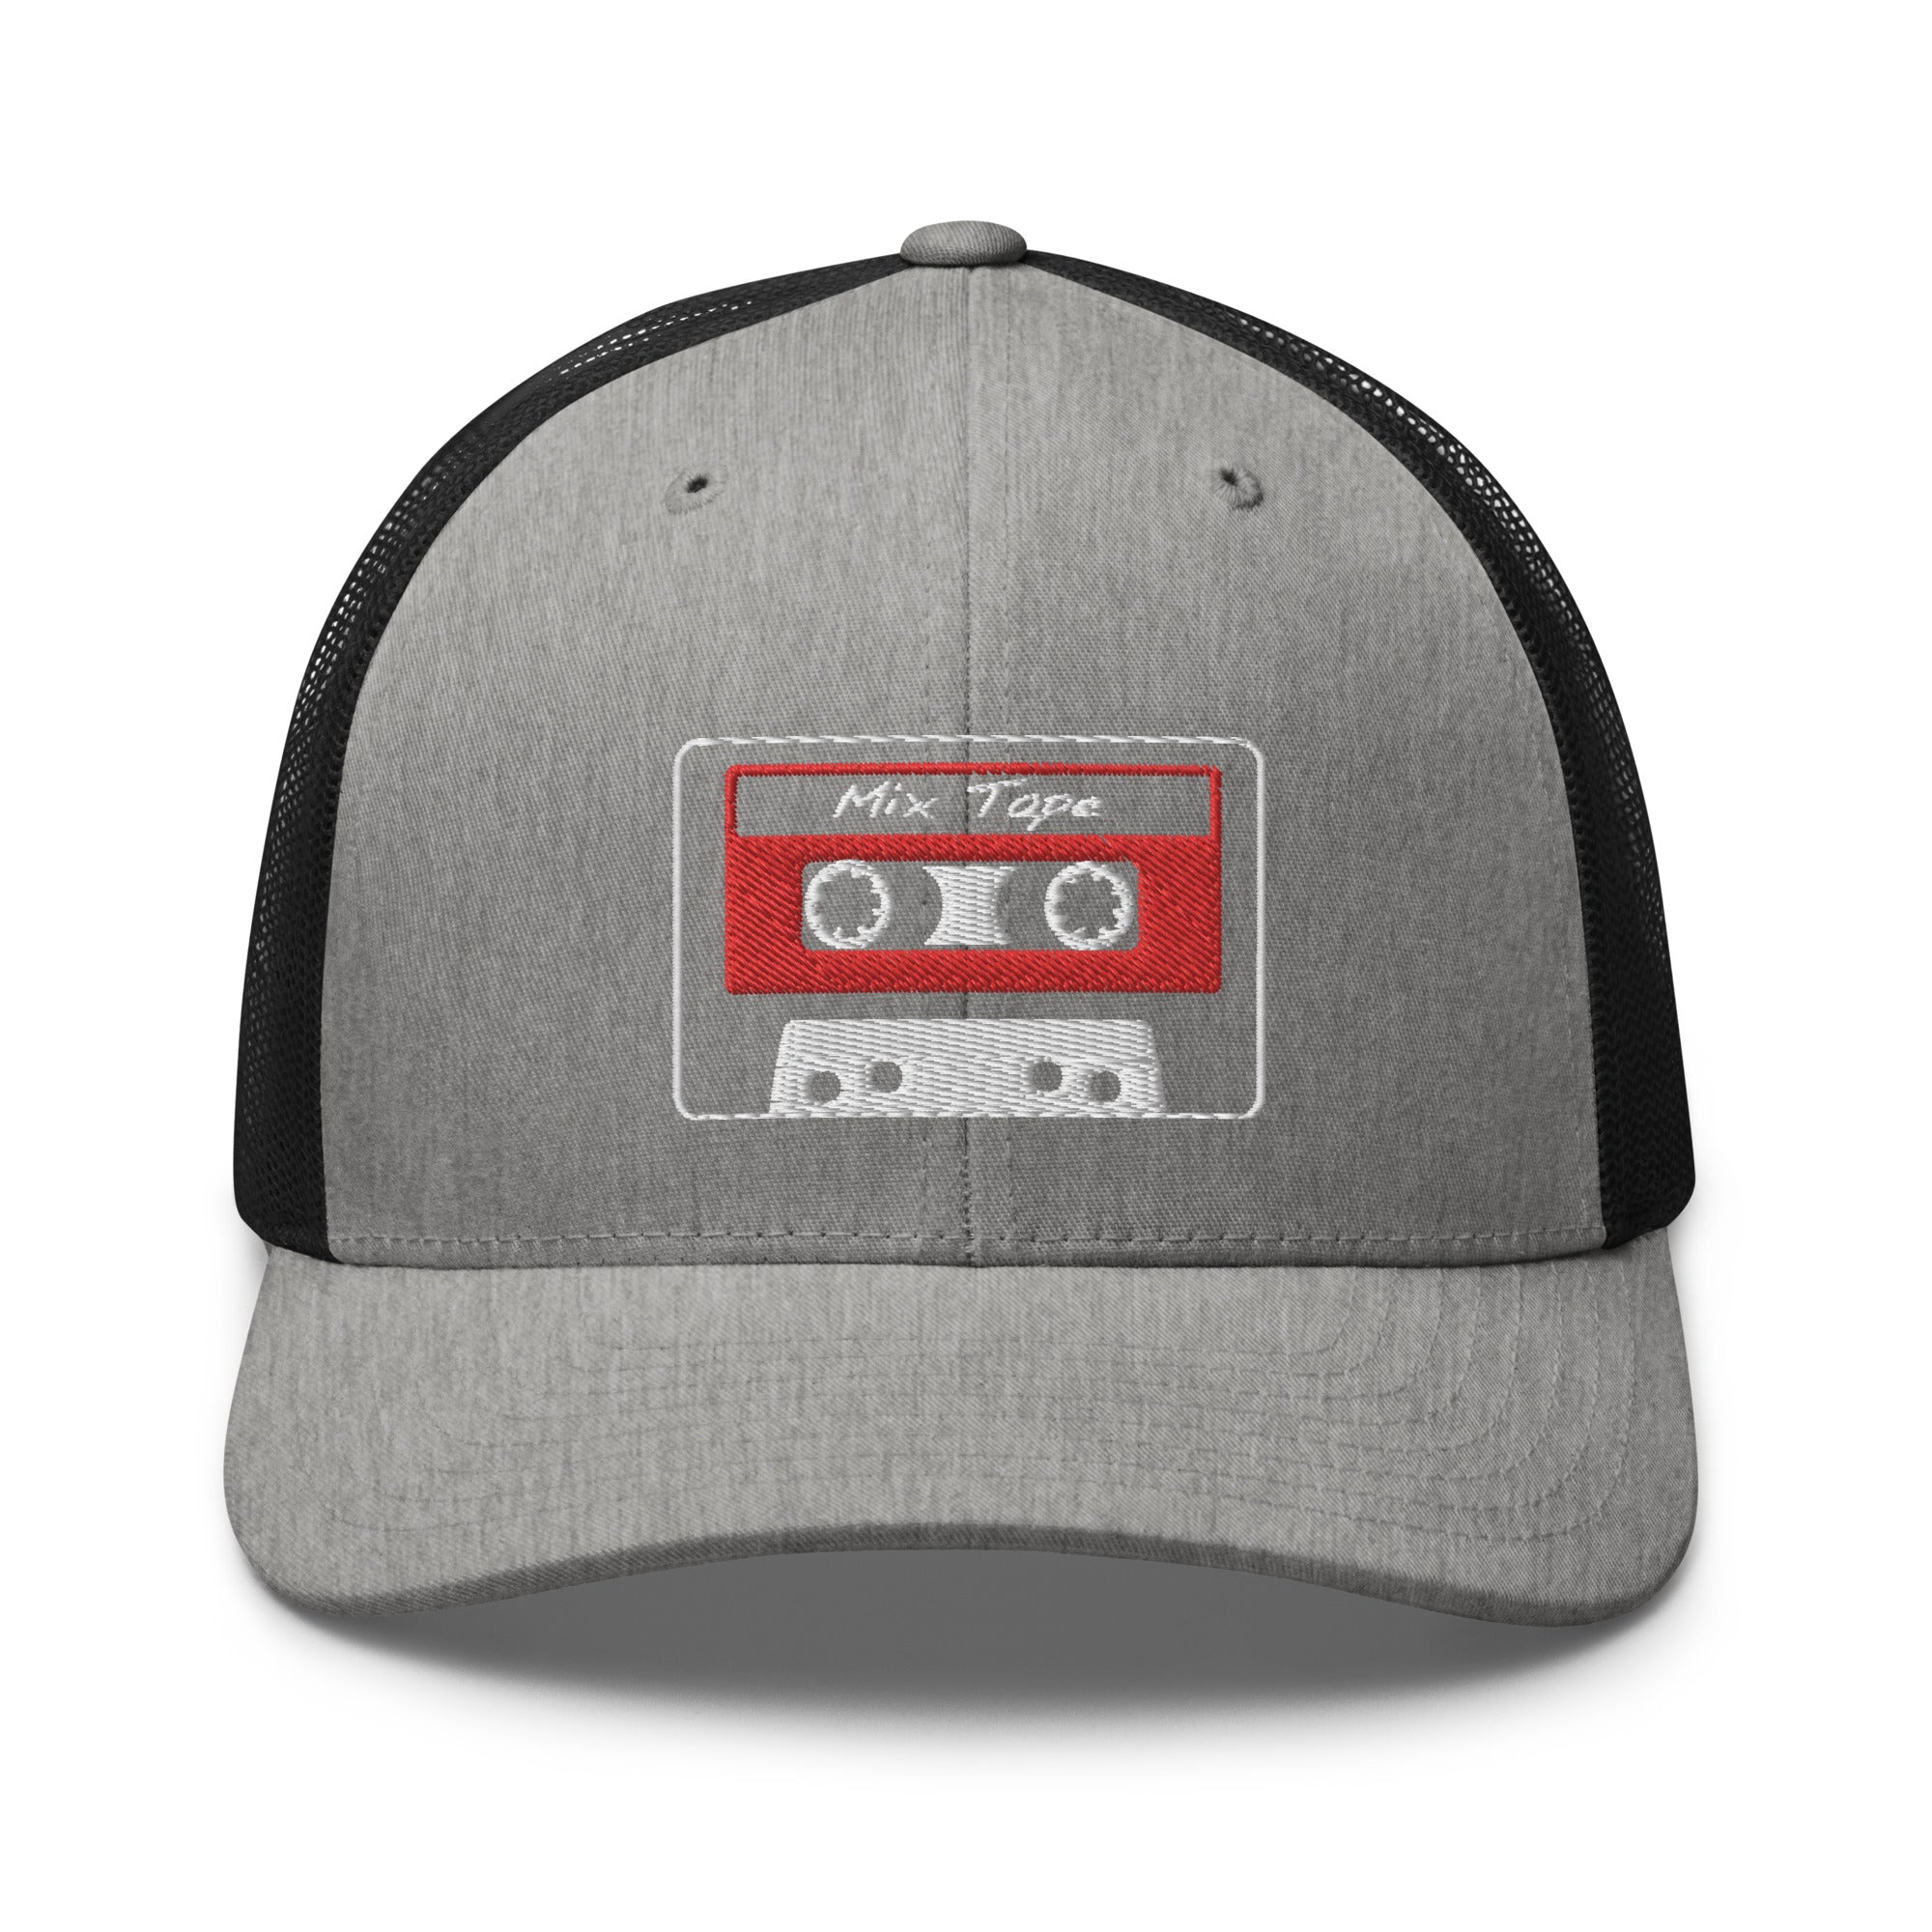 80's Style Retro Cassette Mix Tape Embroidered Retro Trucker Cap Snapback Hat